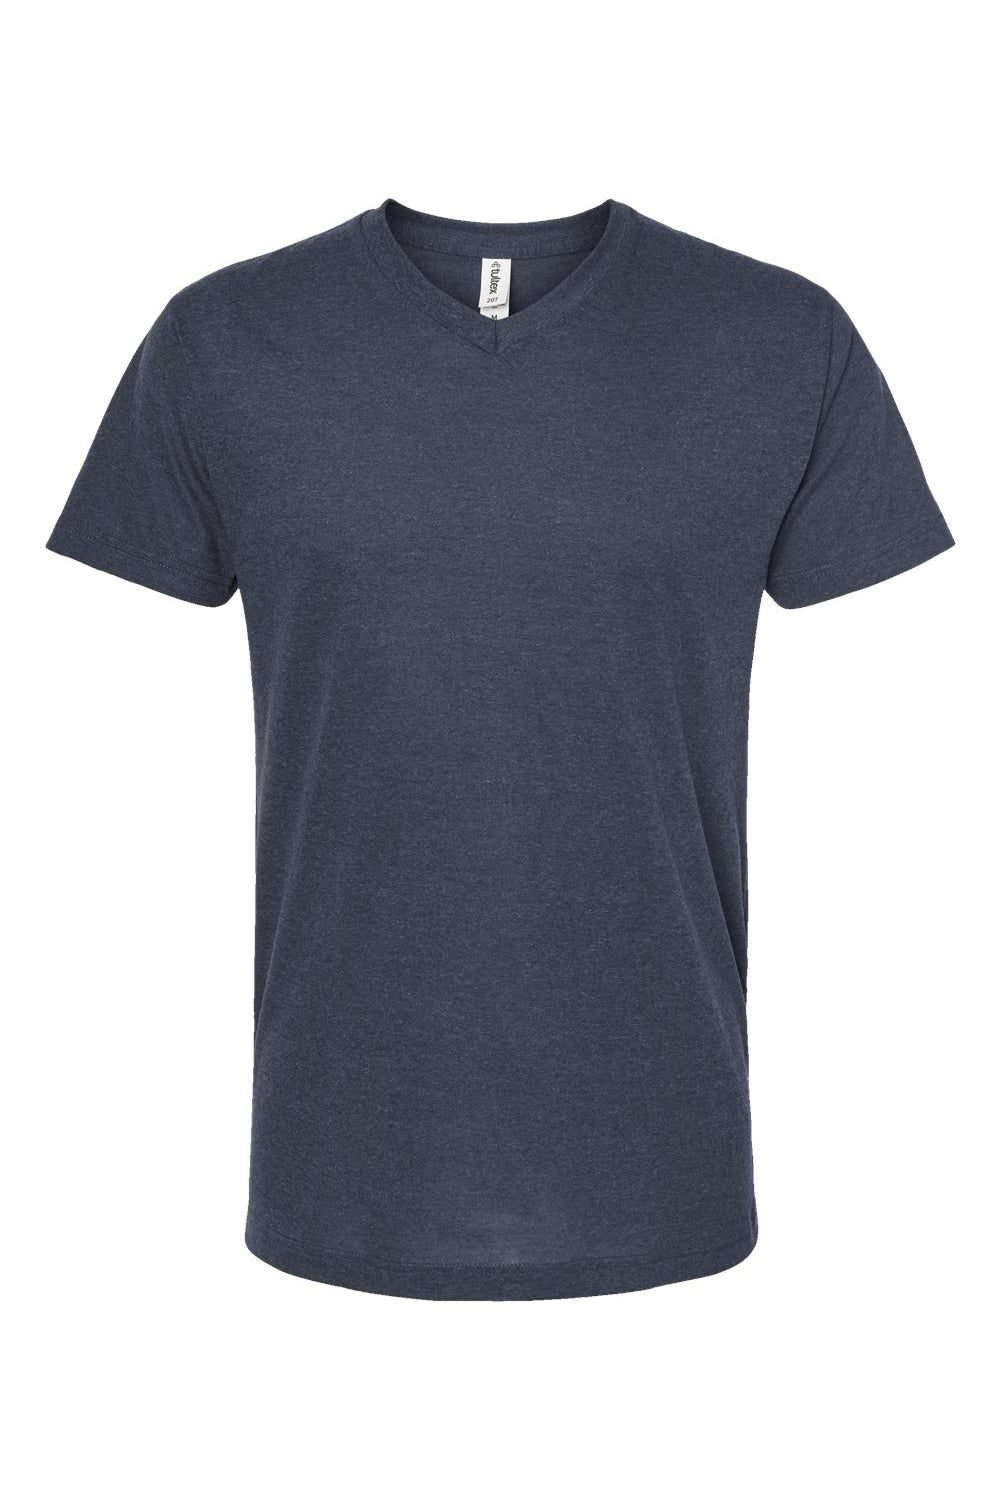 Tultex 207 Mens Poly-Rich Short Sleeve V-Neck T-Shirt Heather Navy Blue Flat Front